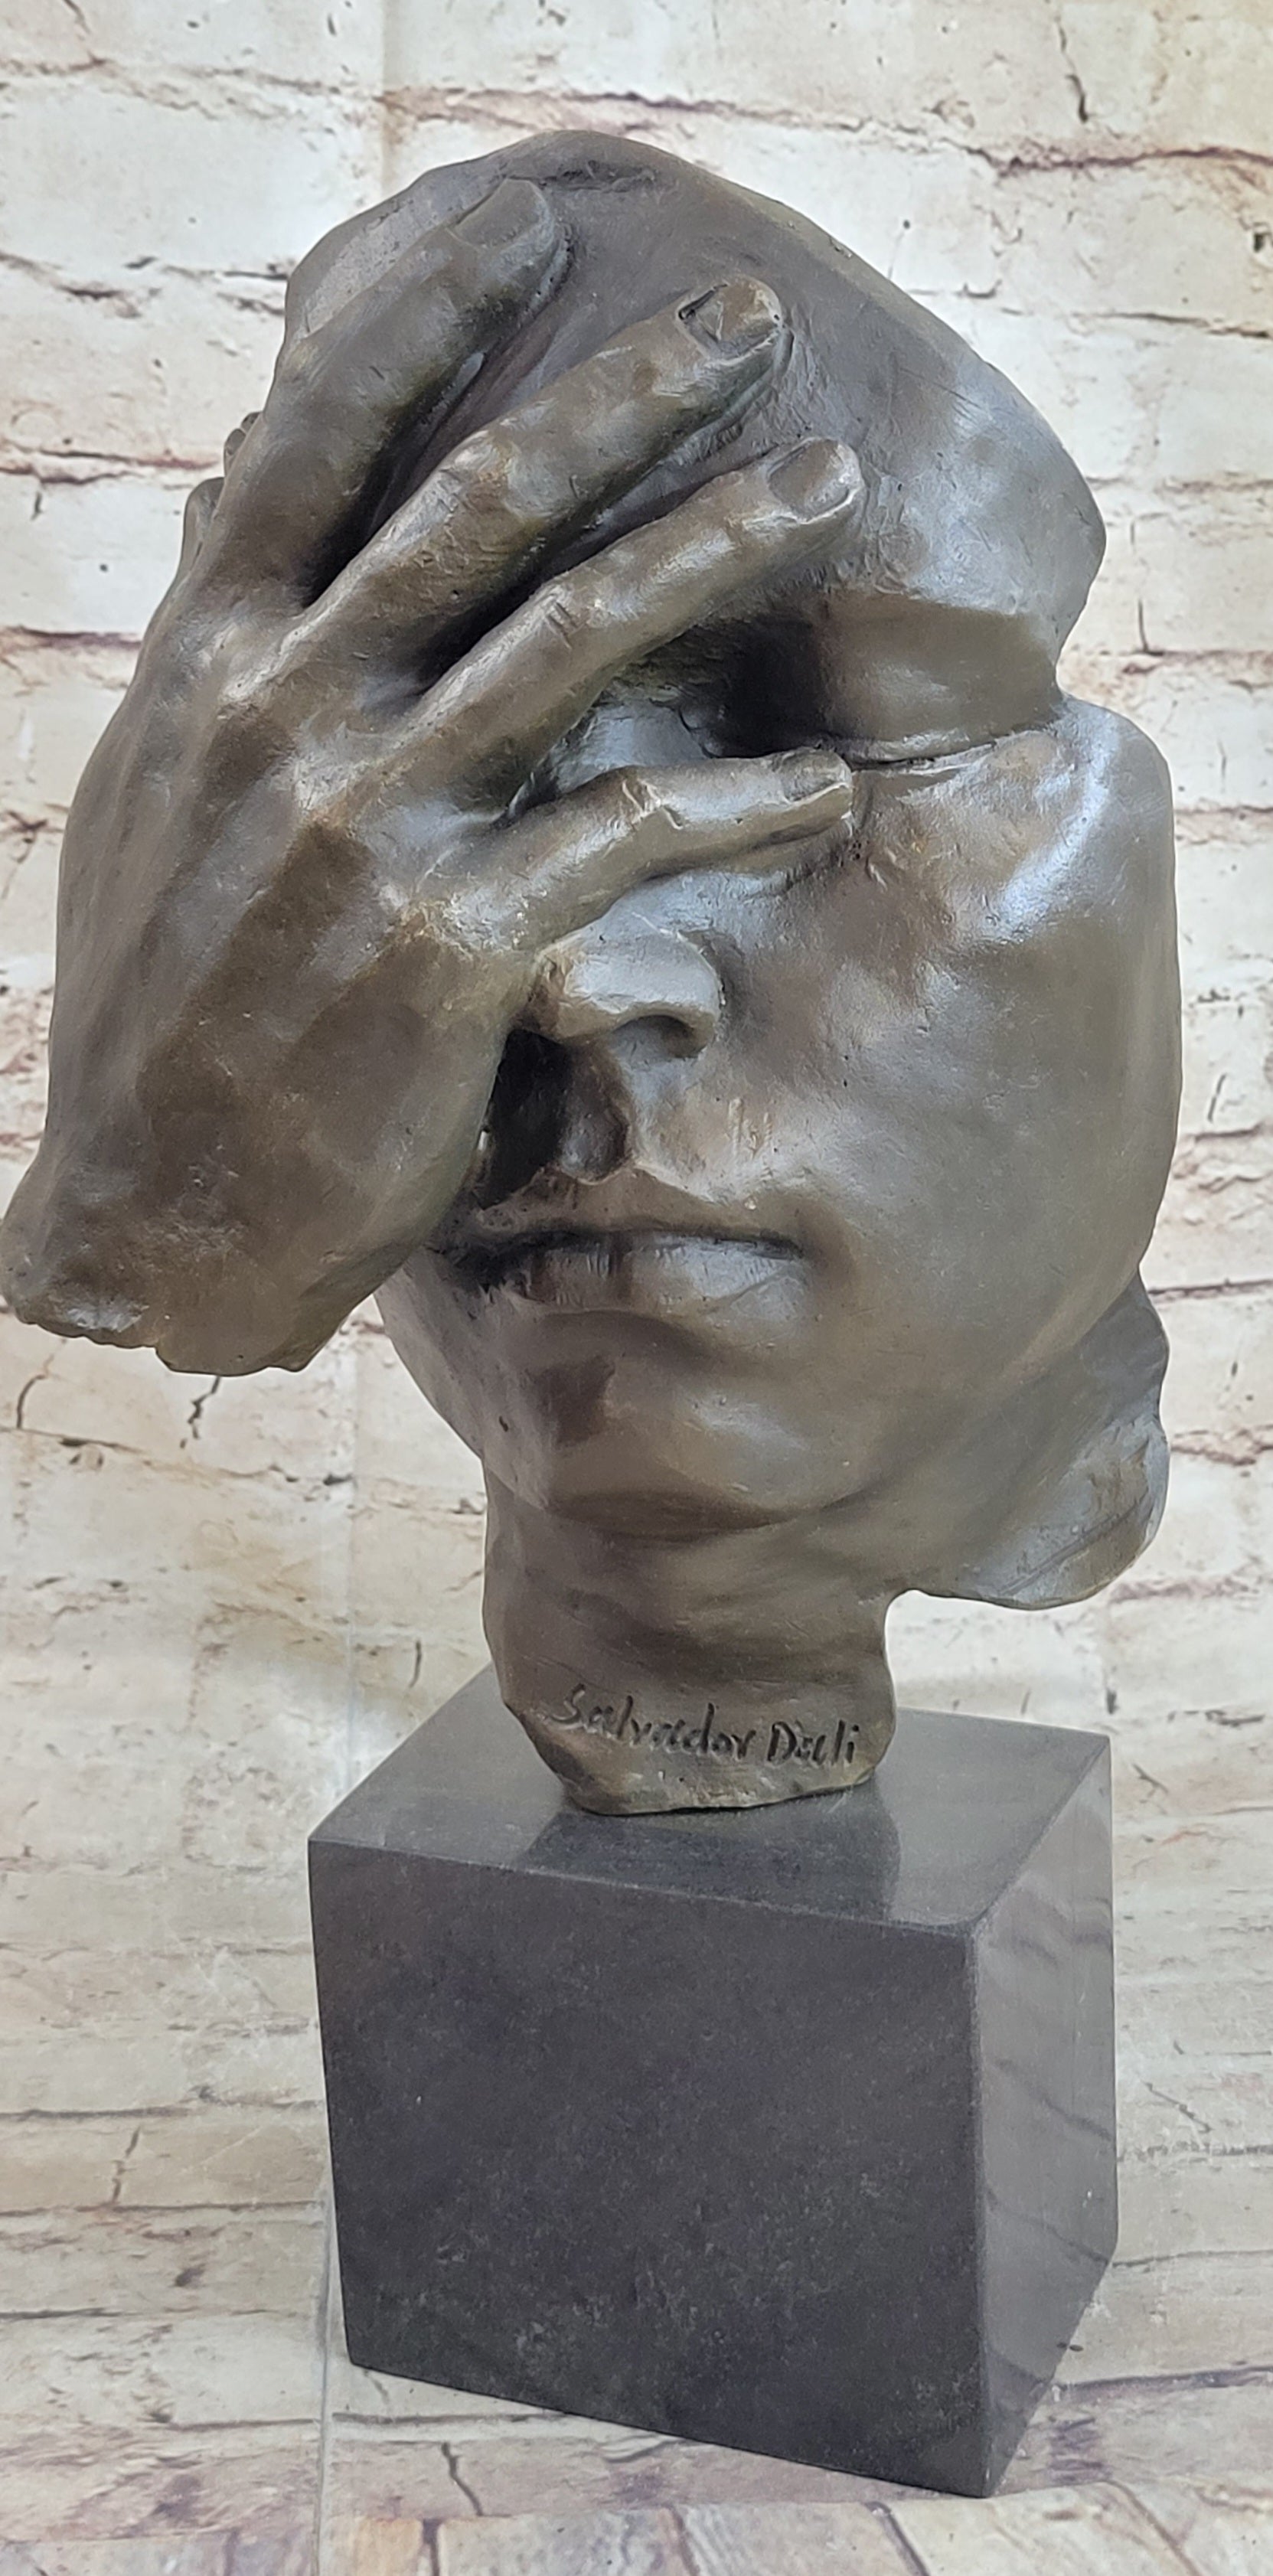 Salvador Dali Shame on Me Hot Cast Musuem Quality Bronze Sculpture Figurine